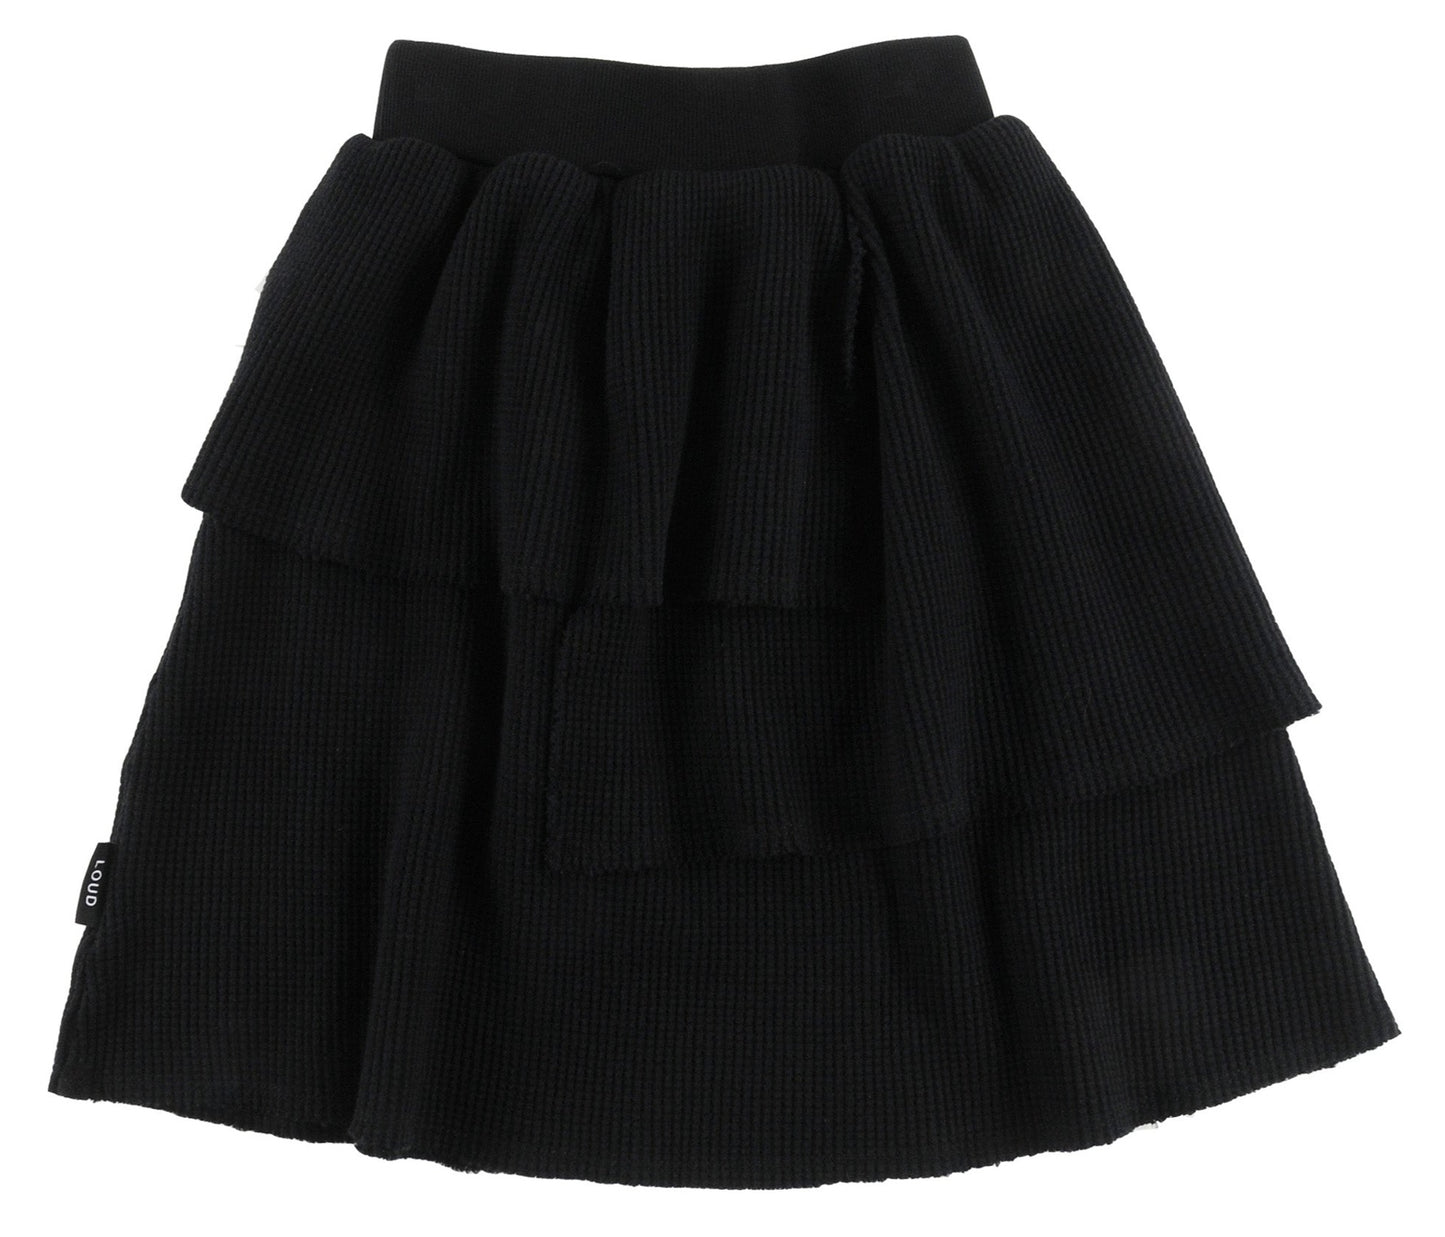 Loud Apparel Heart Skirt